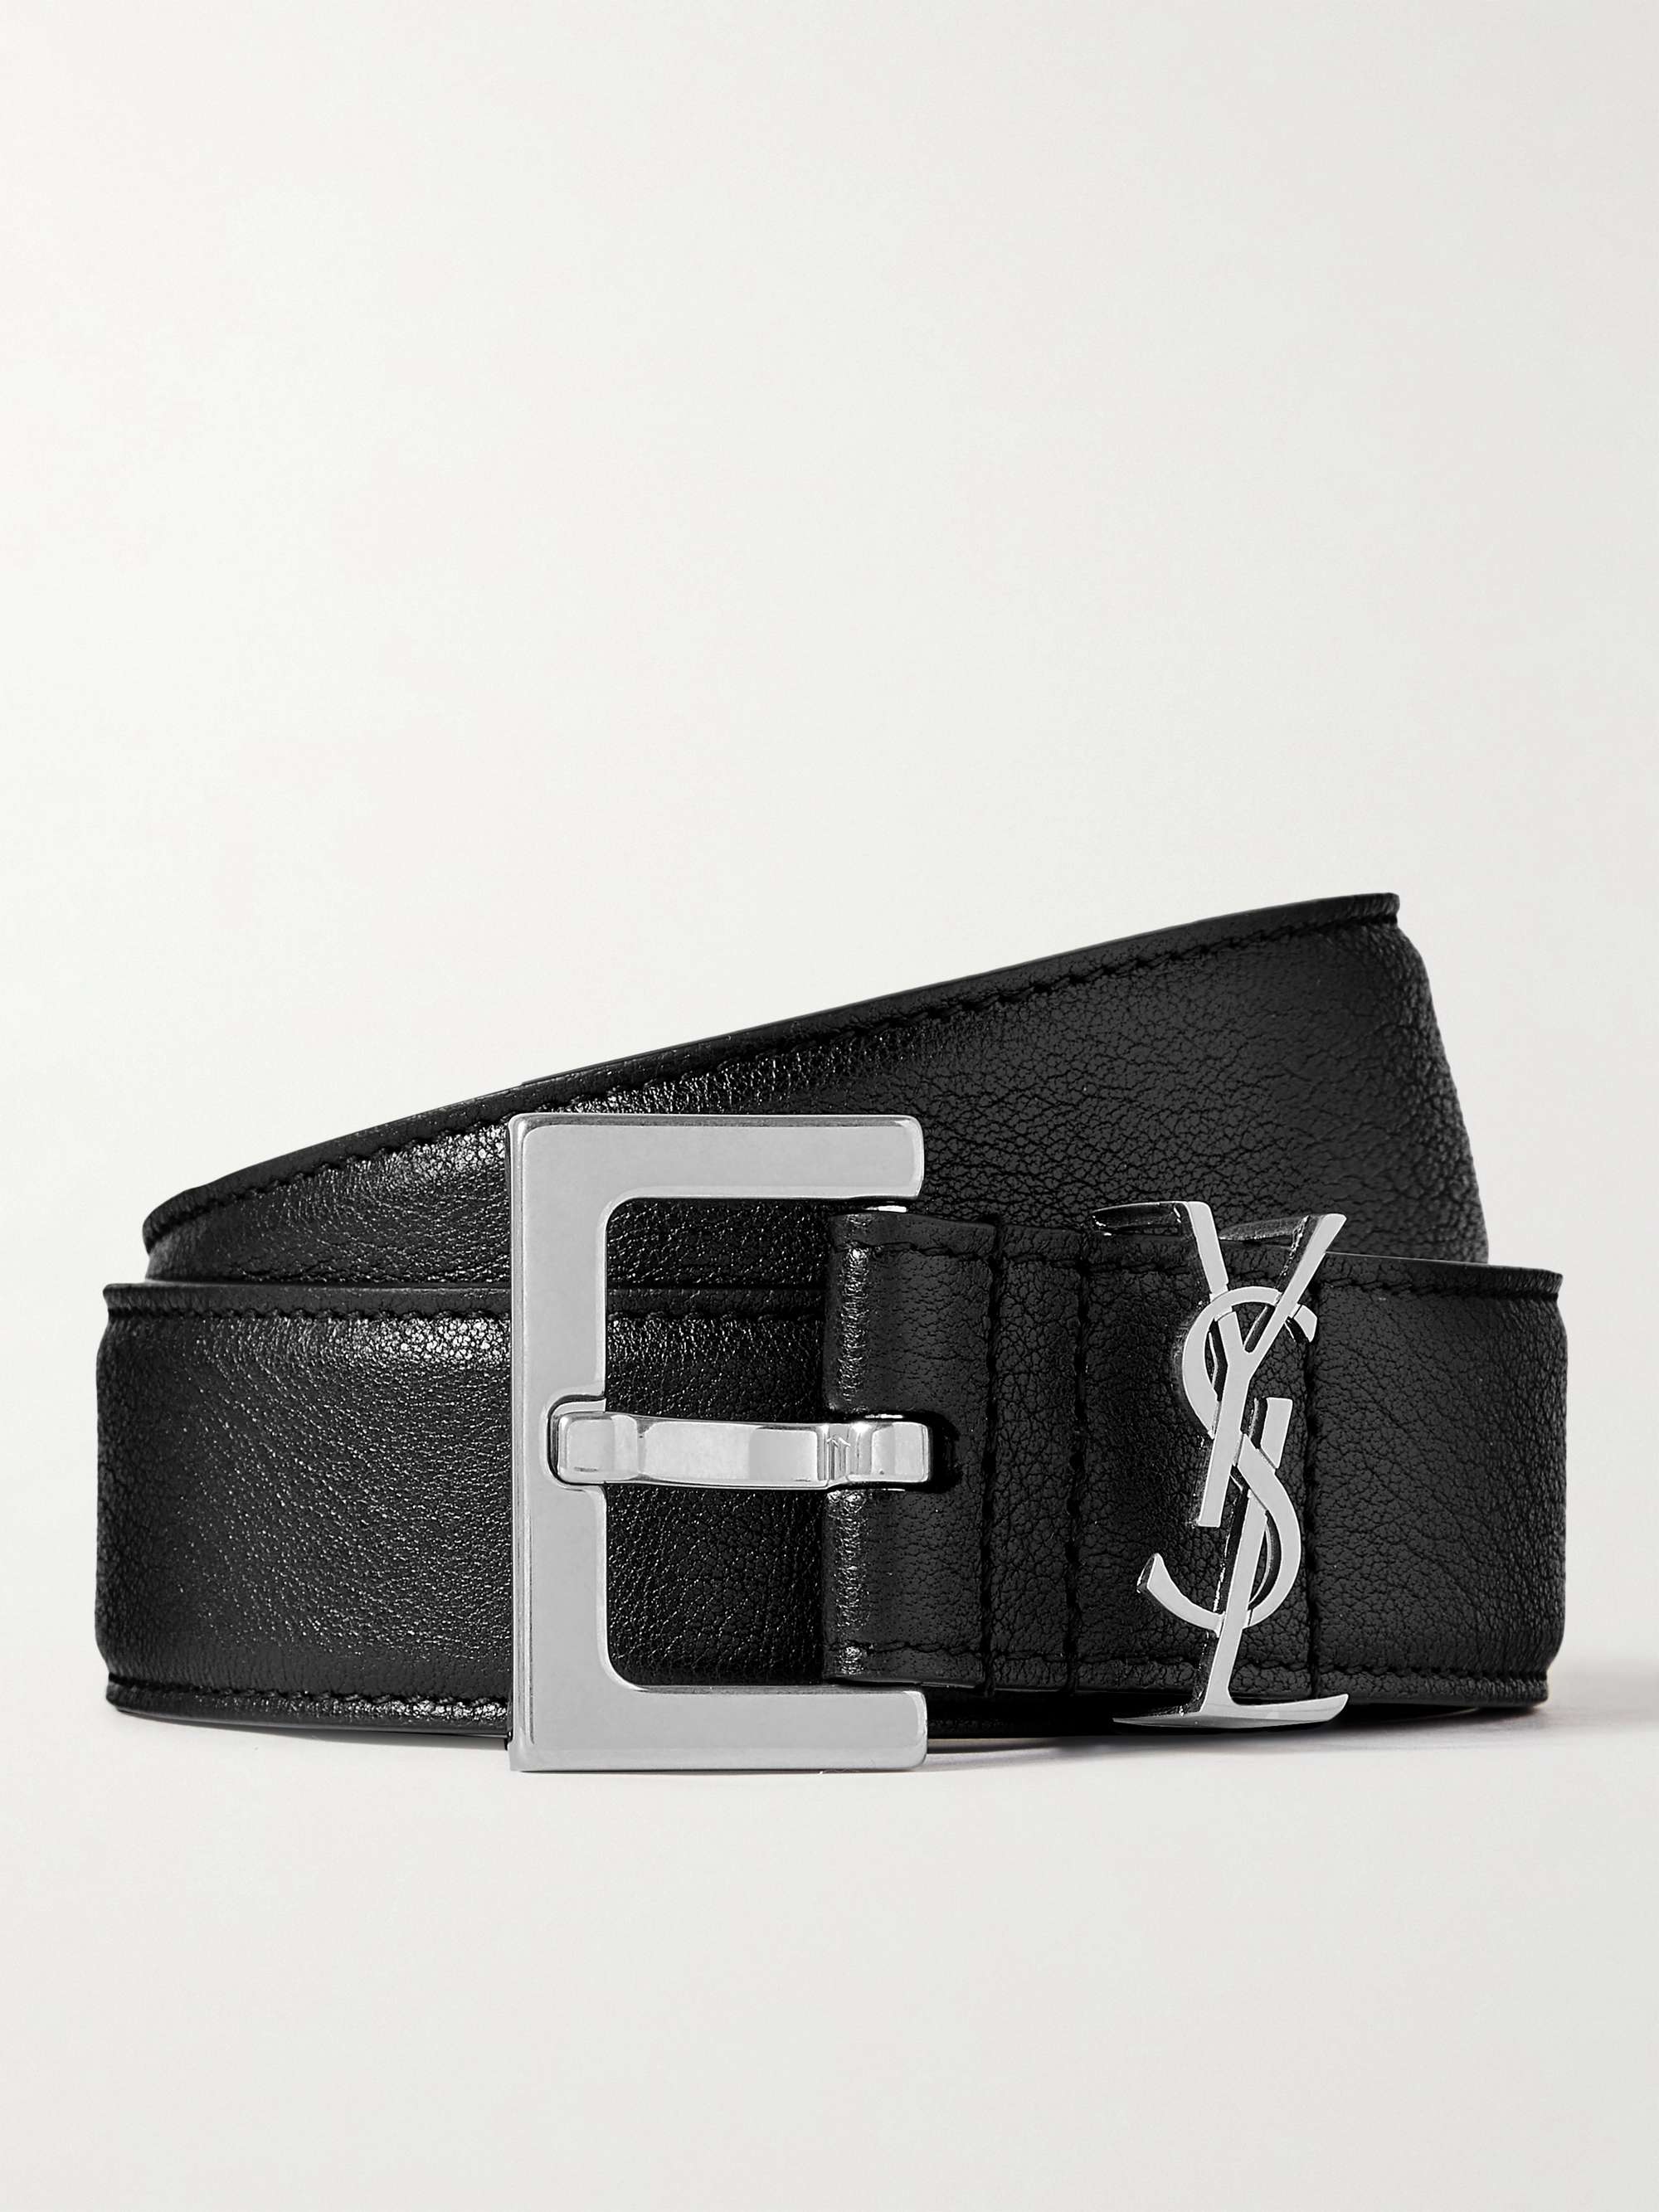 YSL Yves Saint Laurent Men's Leather Black Belt Size 34 